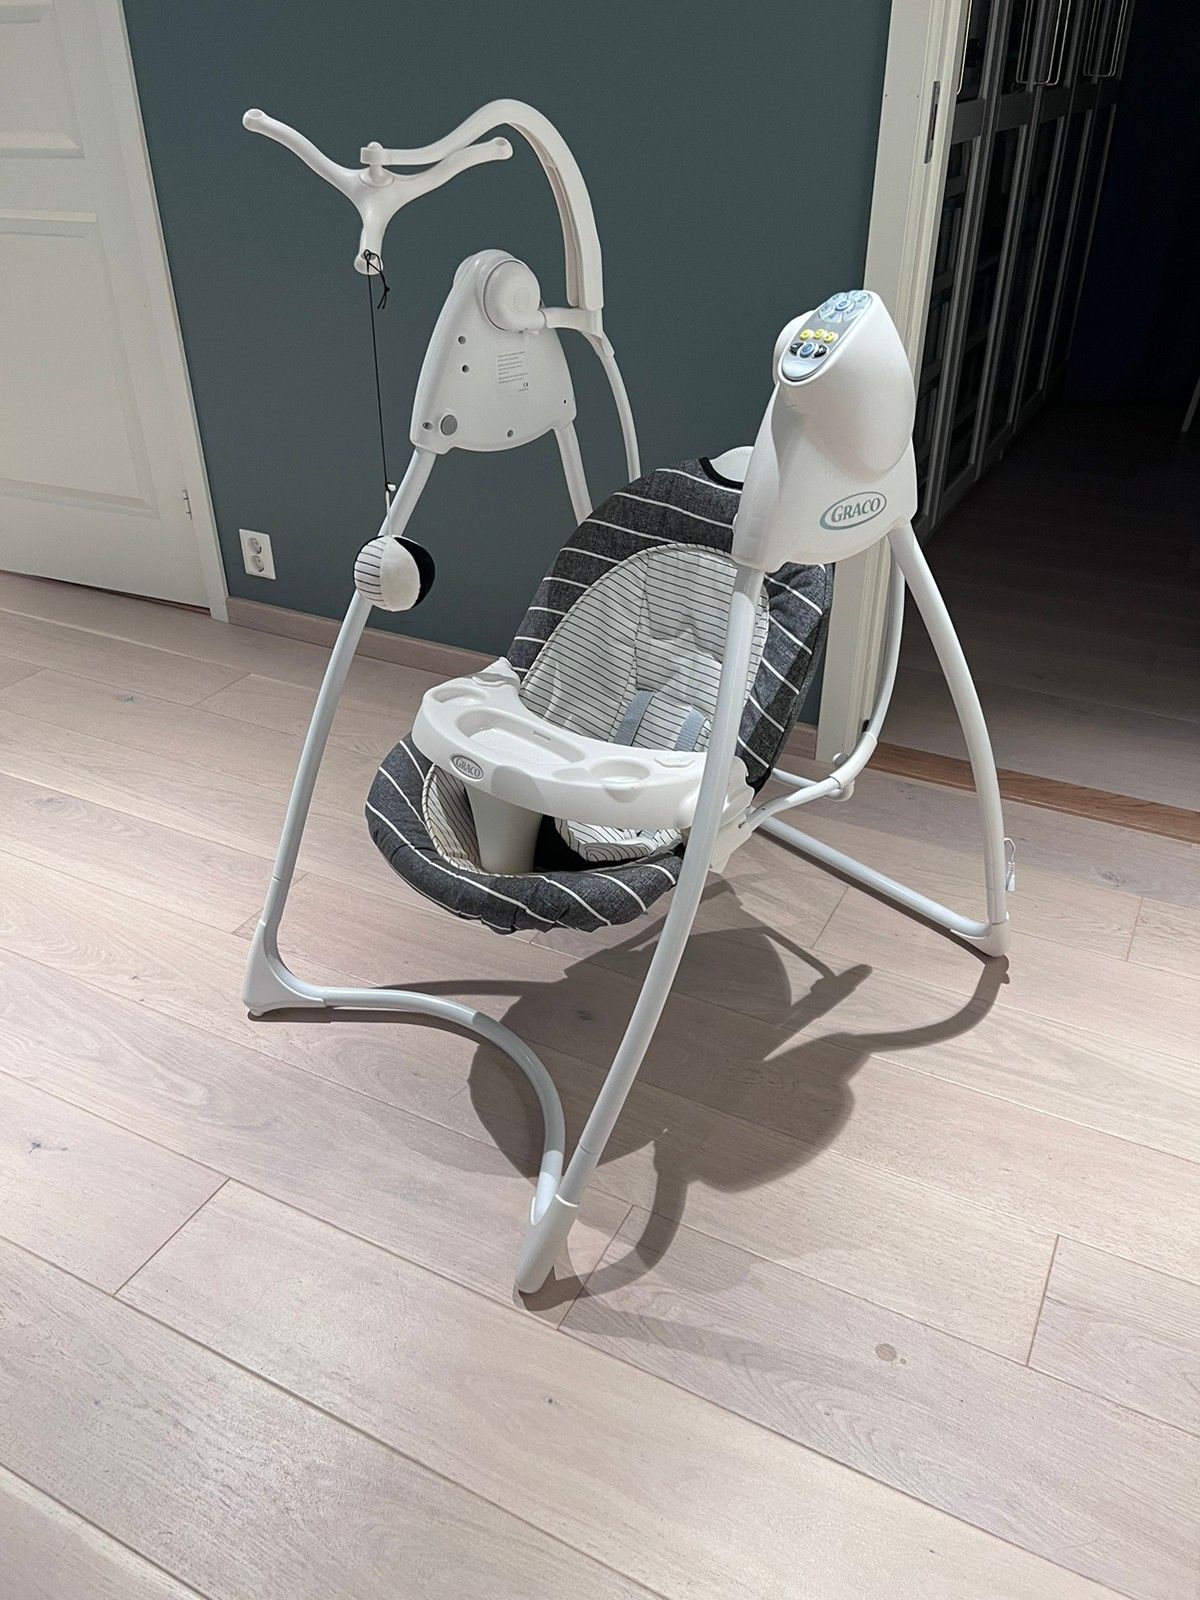 hæk Figur Ved en fejltagelse Graco elektronisk vippestol med musikk til baby | FINN torget